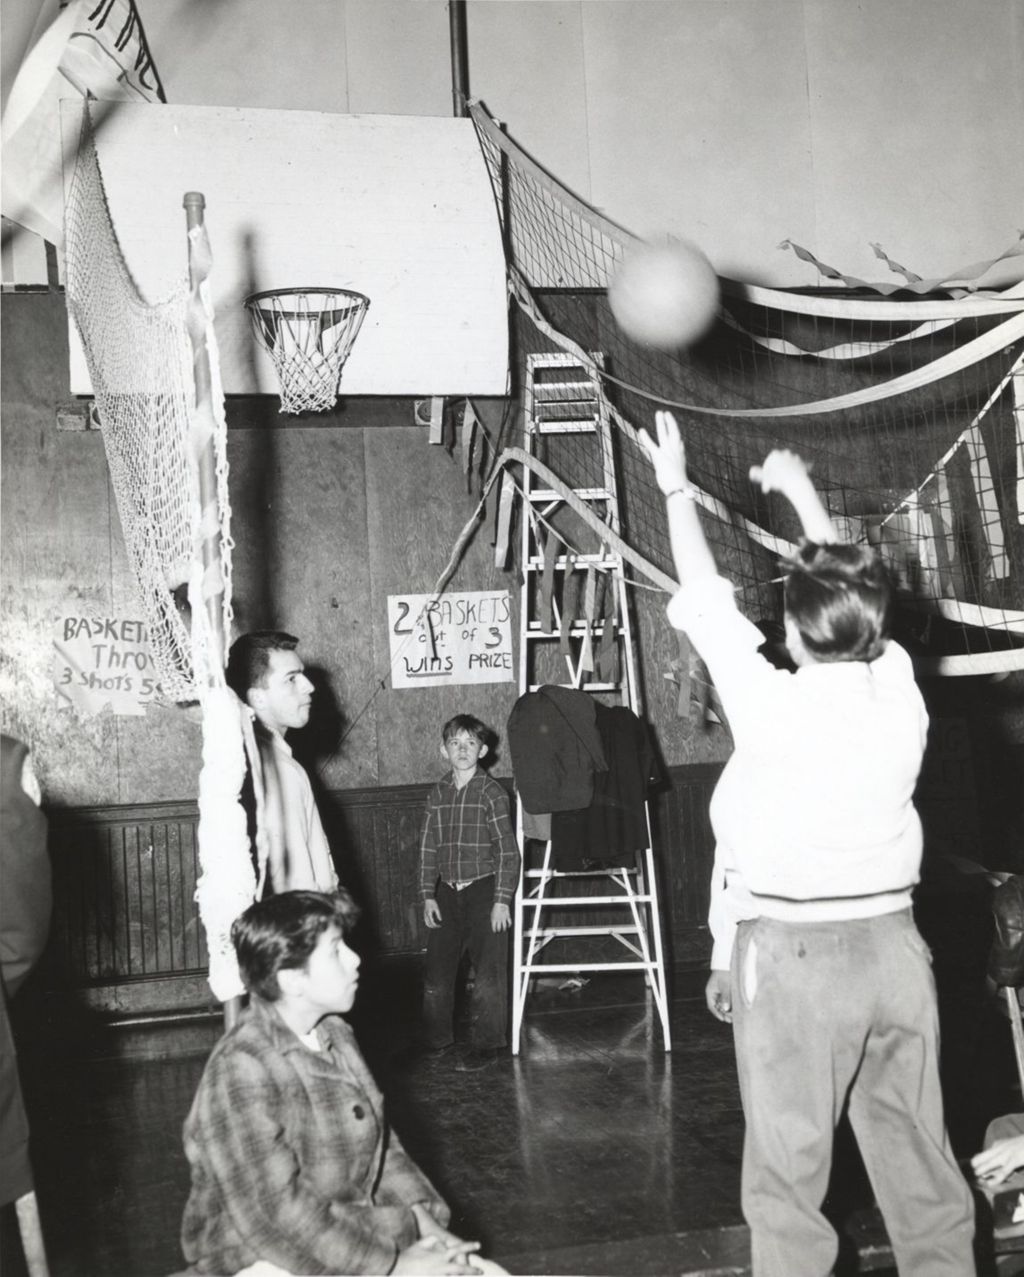 Shooting basketballs at an event